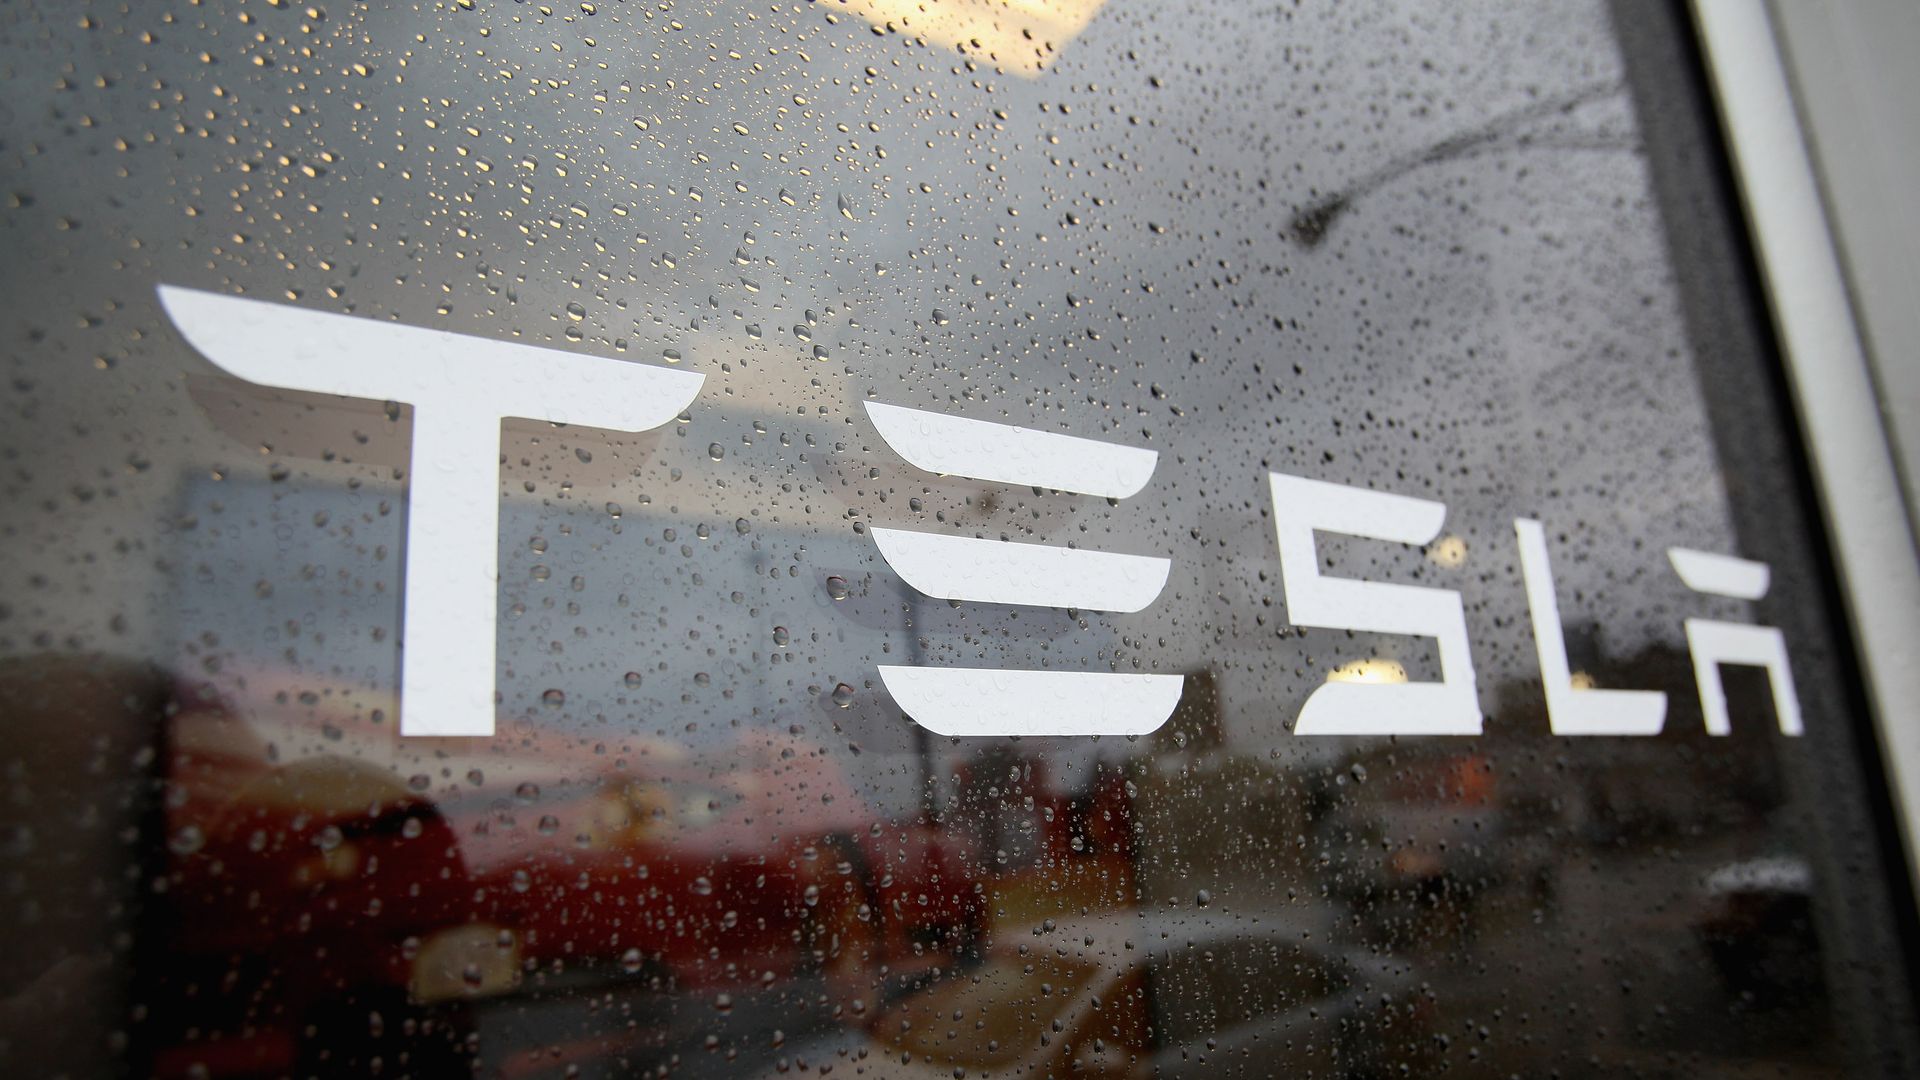 The Tesla logo on a window with rain.